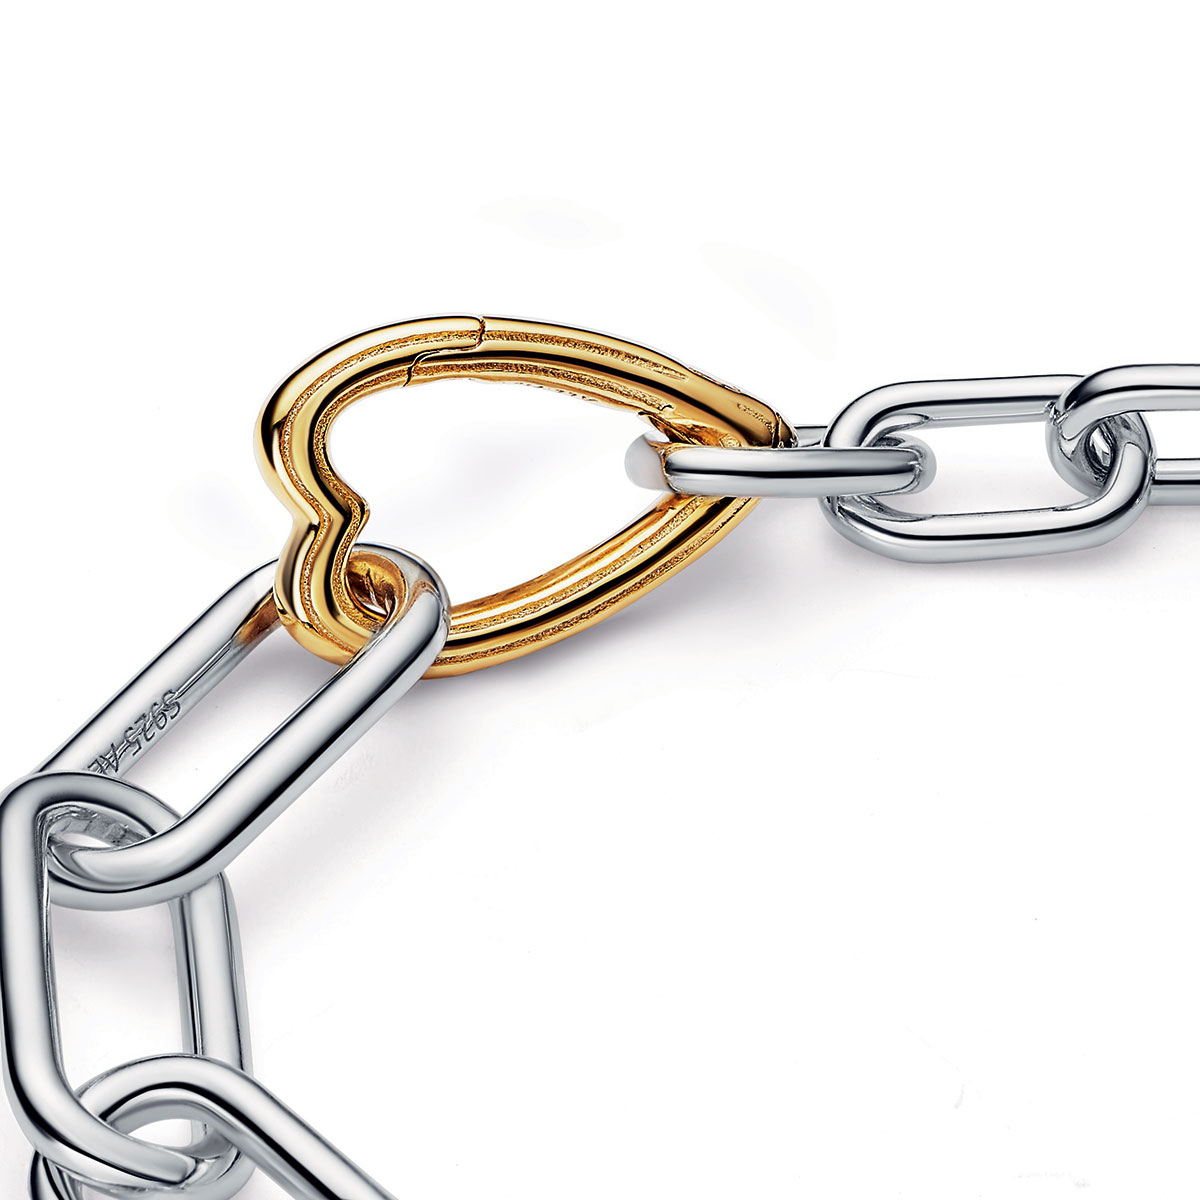 Pandora ME Two-tone Heart Link Chain Bracelet